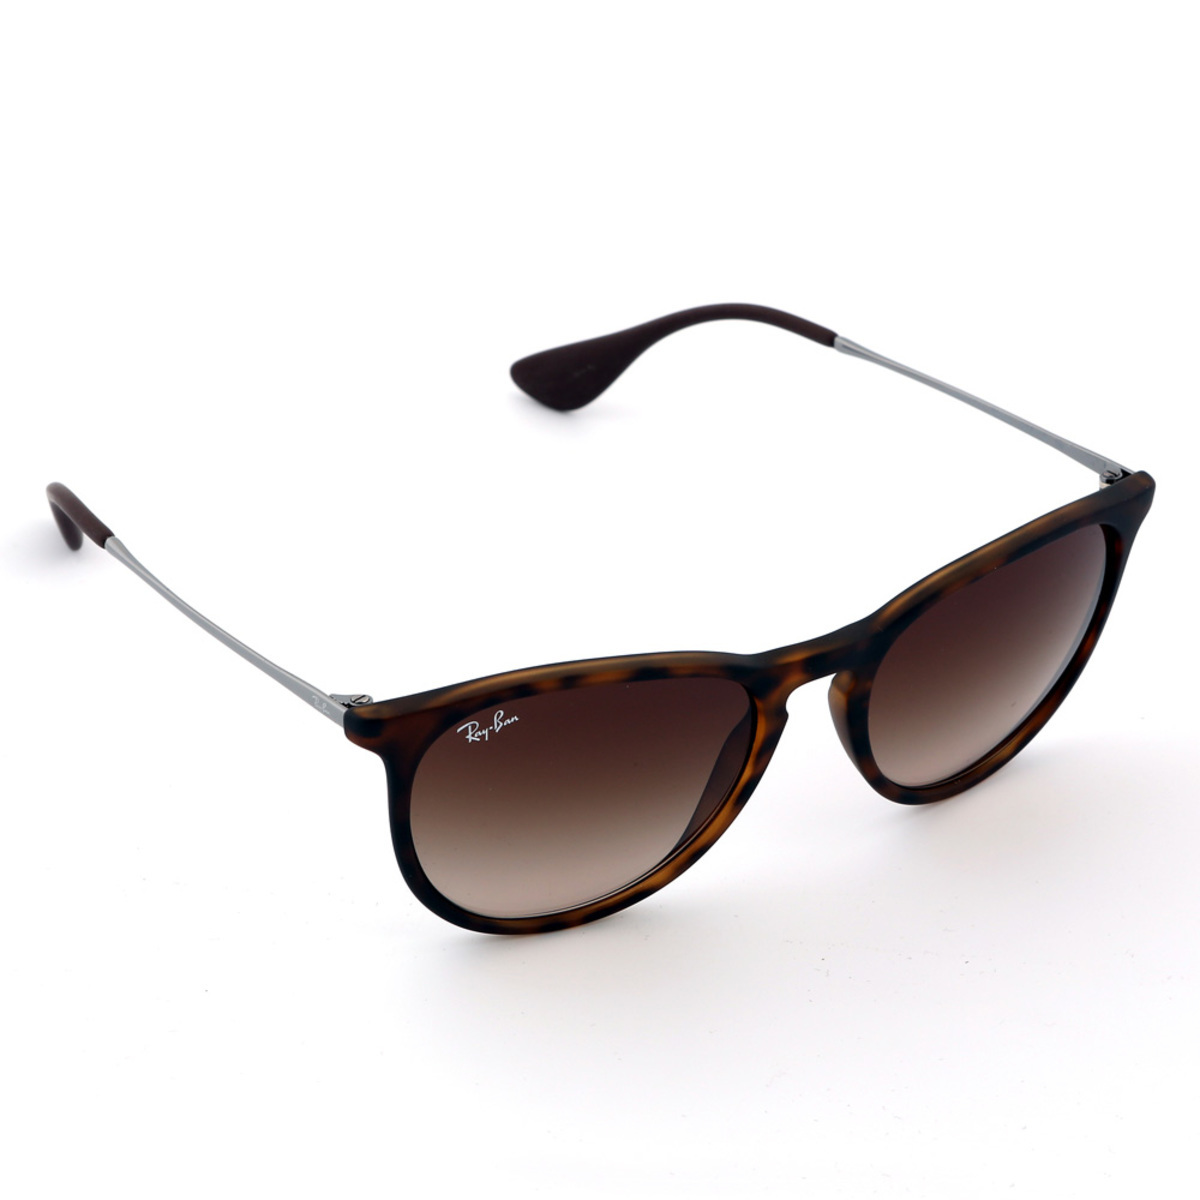 Ray-Ban Erika Havana Sunglasses with Brown Lenses, RB4171 865/13